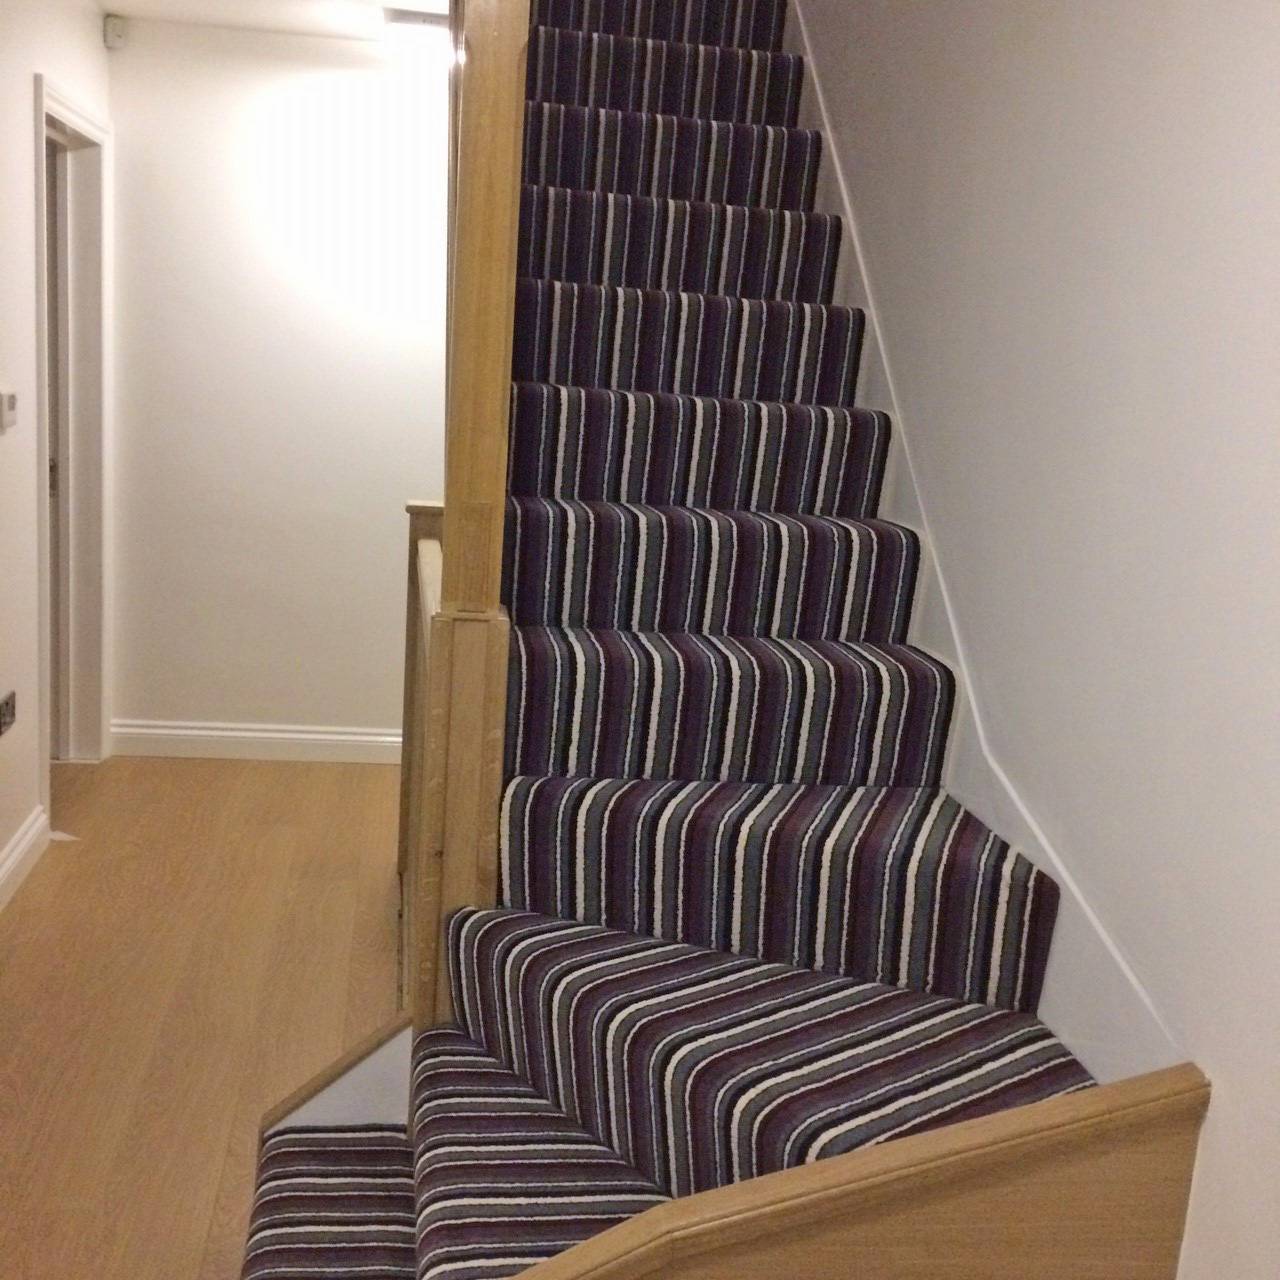 Stripe carpet fitting job on stairs